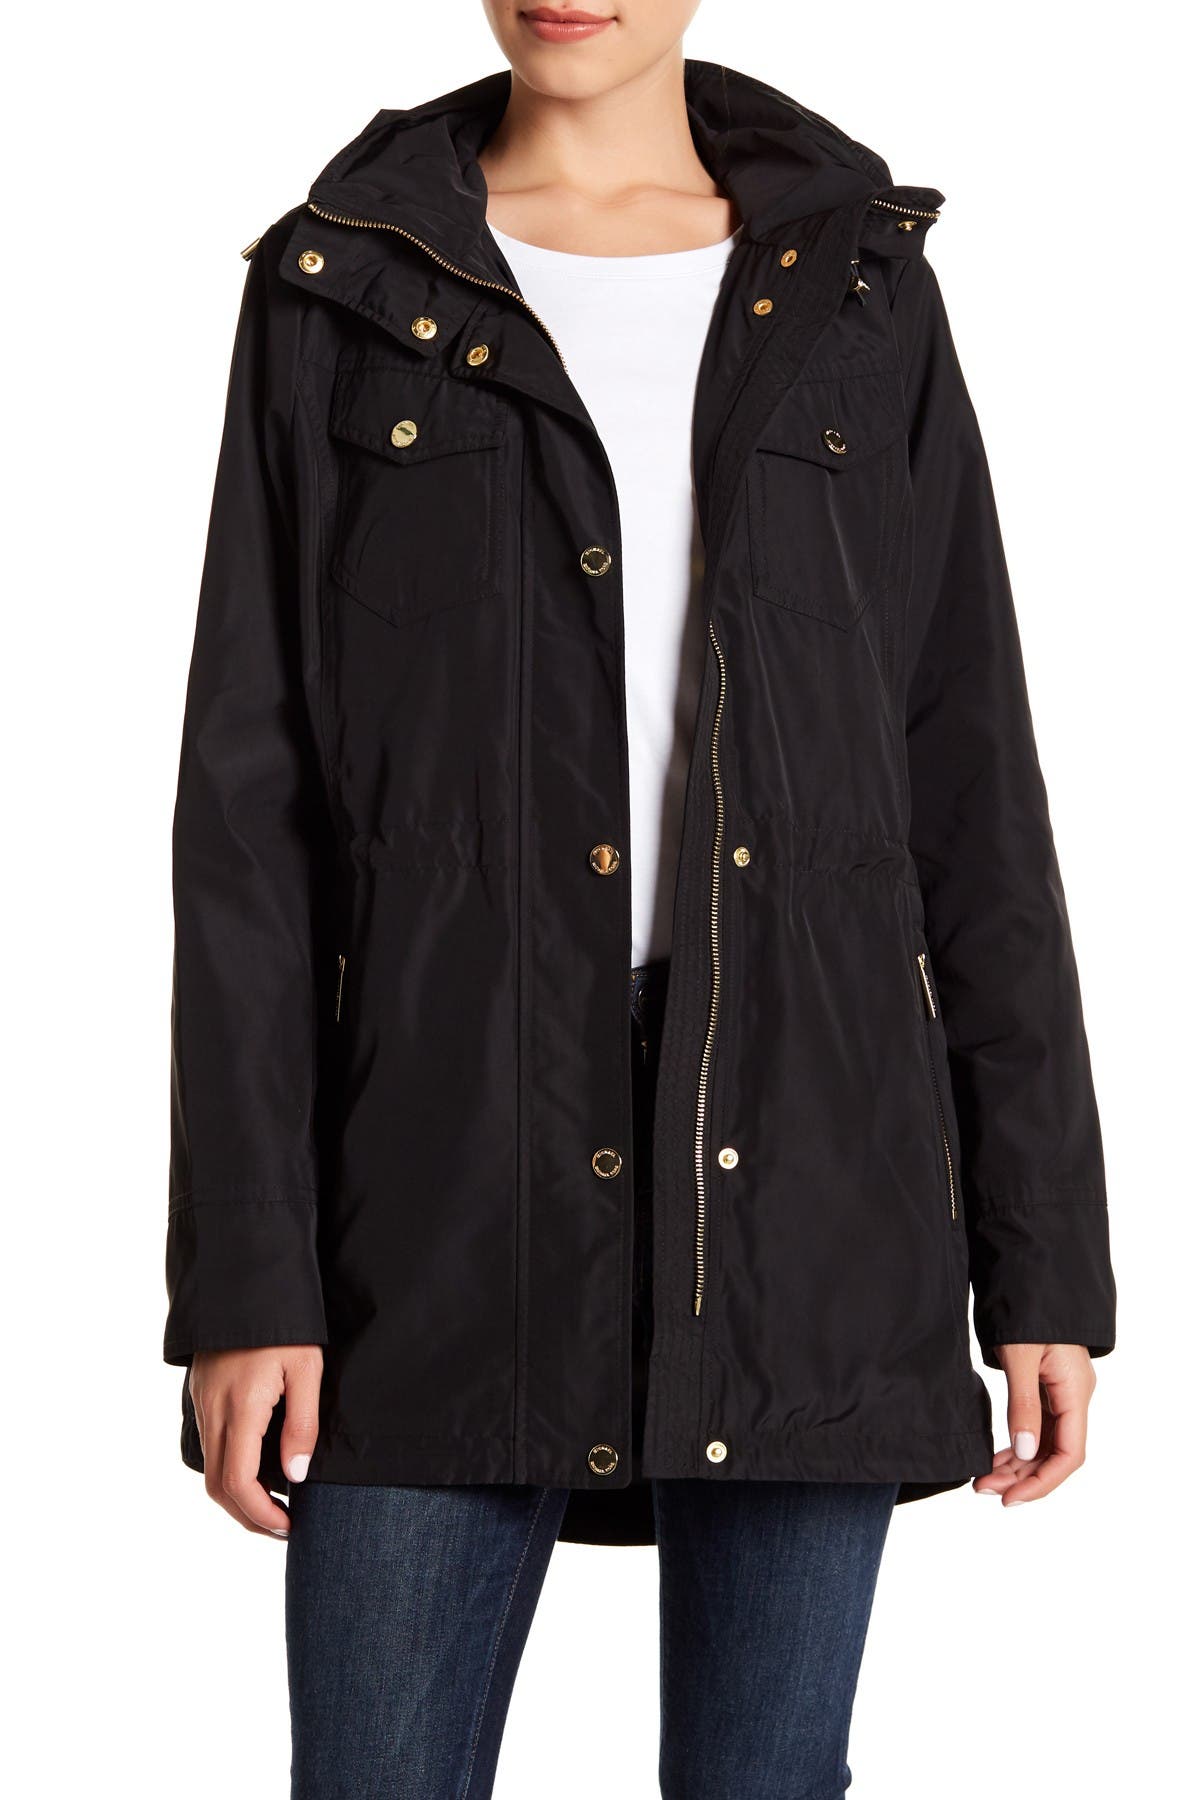 michael kors raincoat with hood